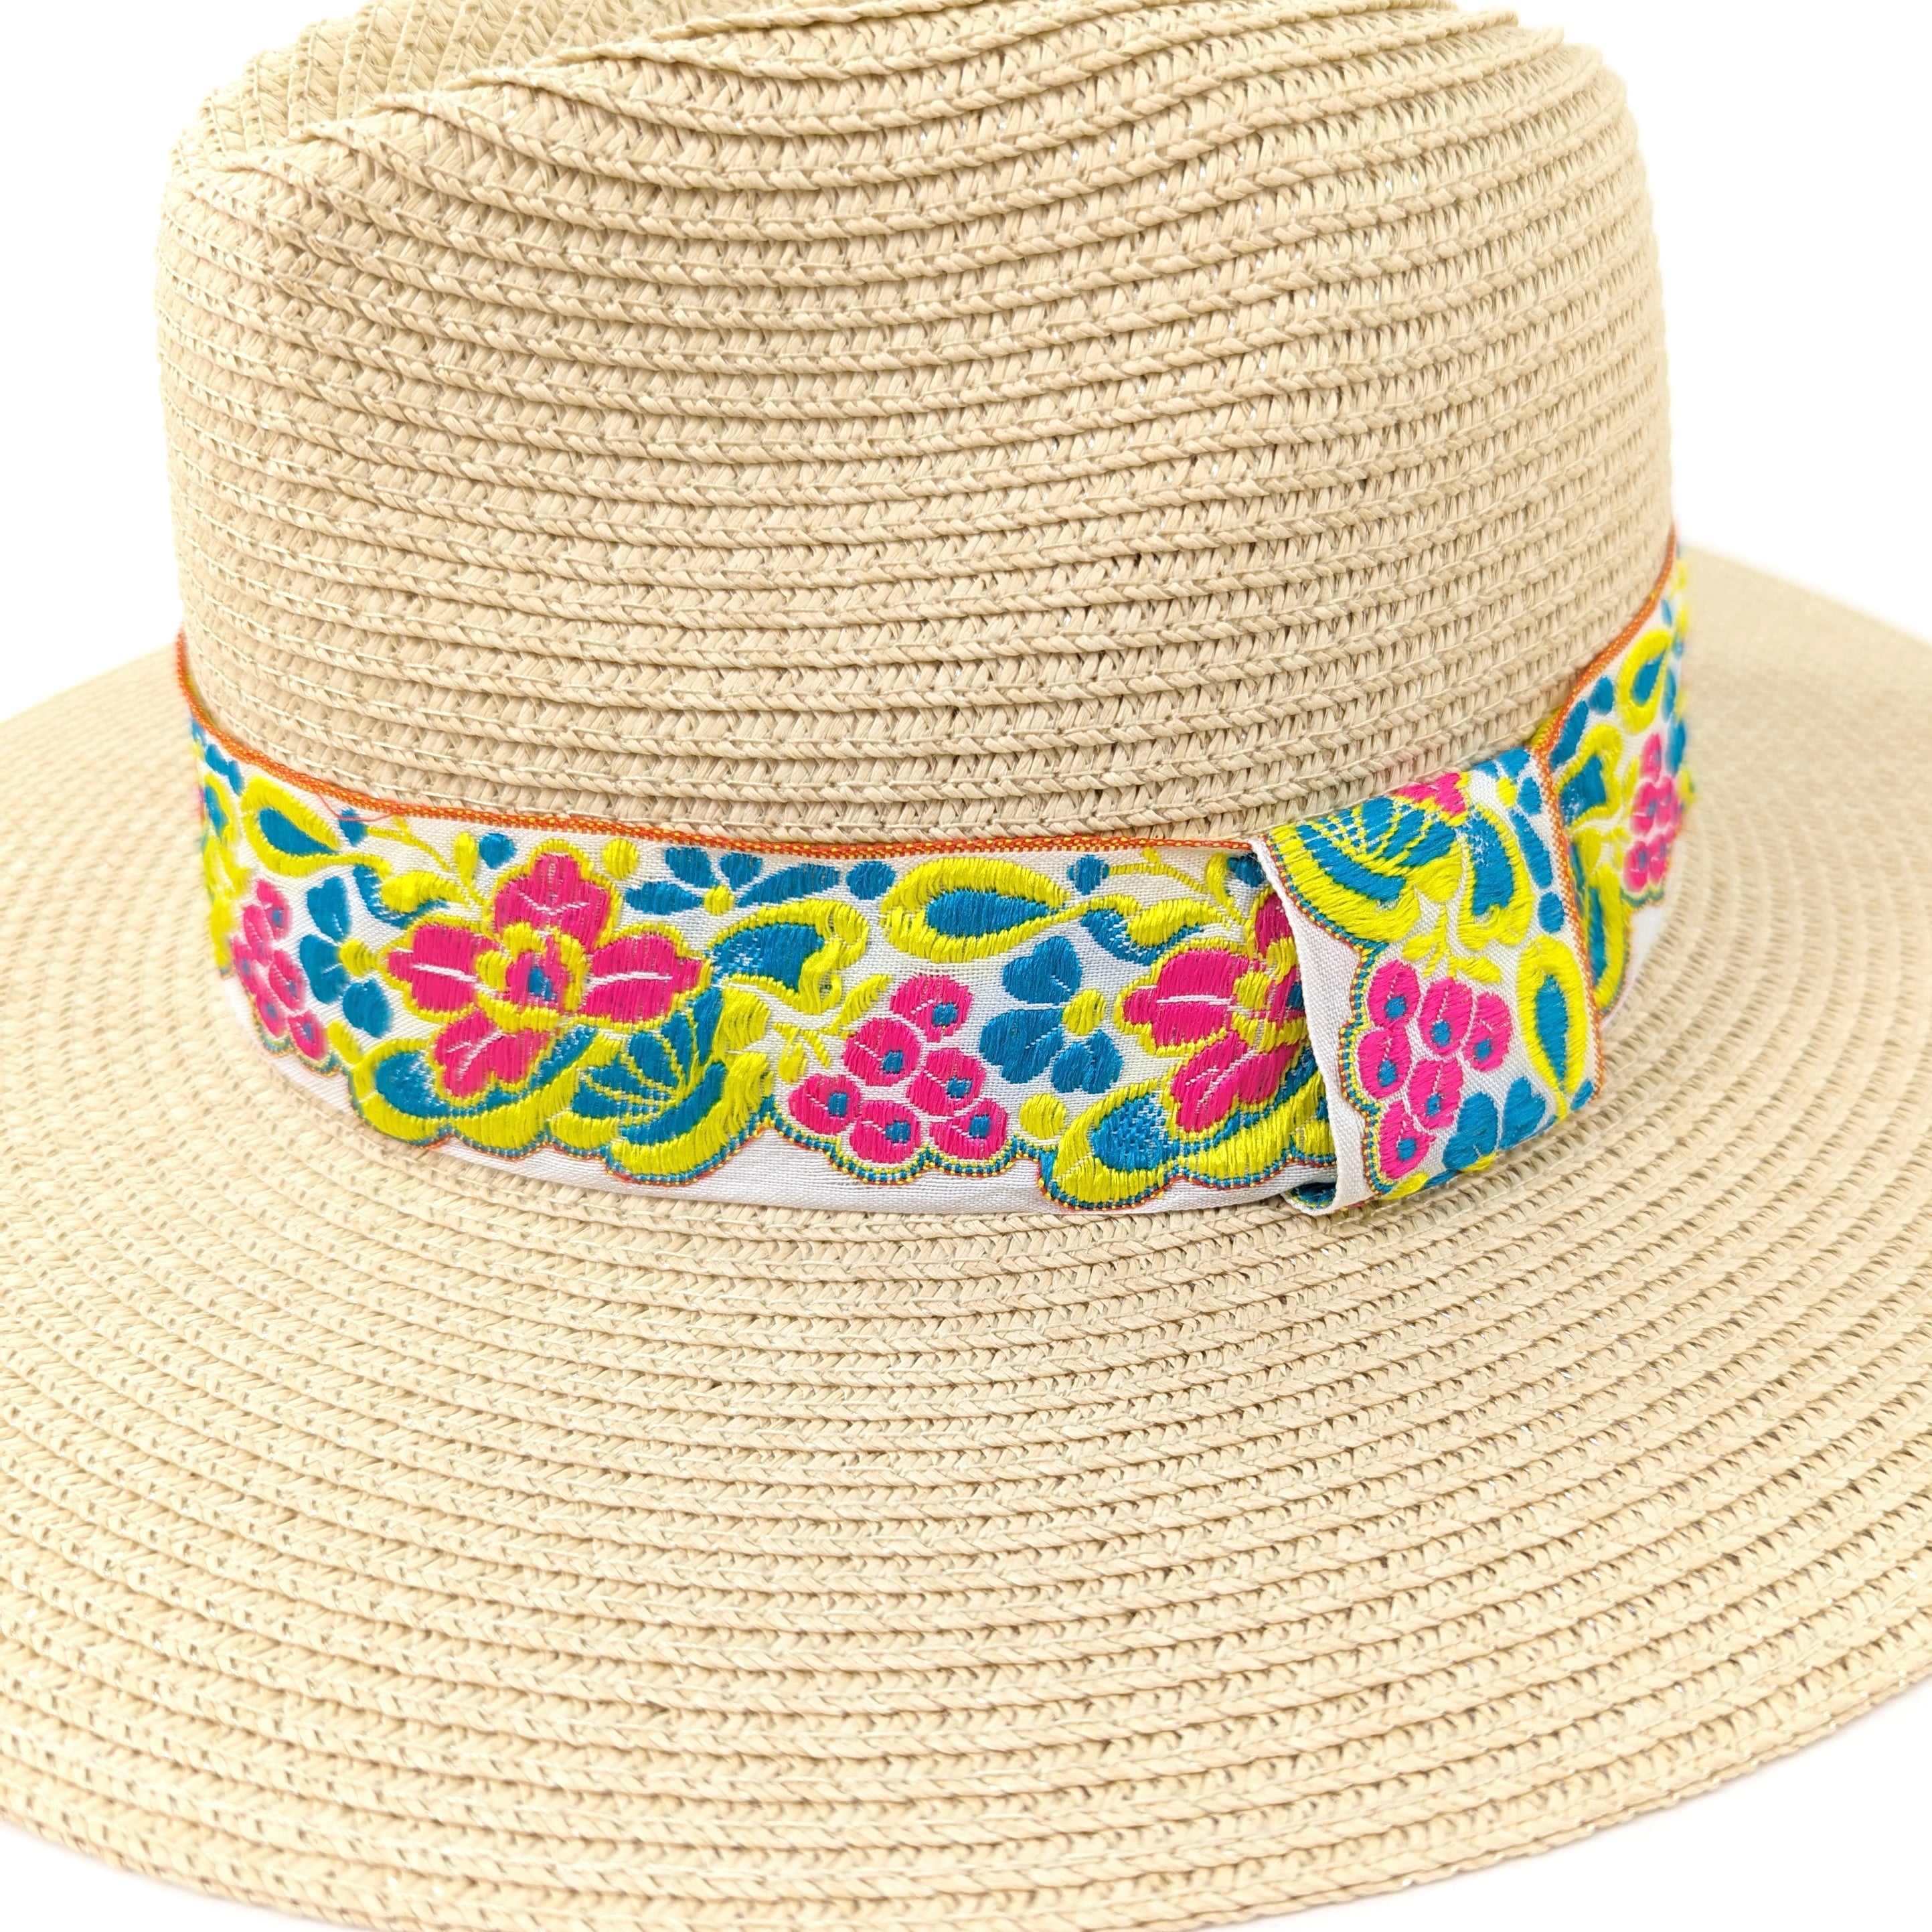 Vibrant Flower Foldable Panama Hat (57cm)